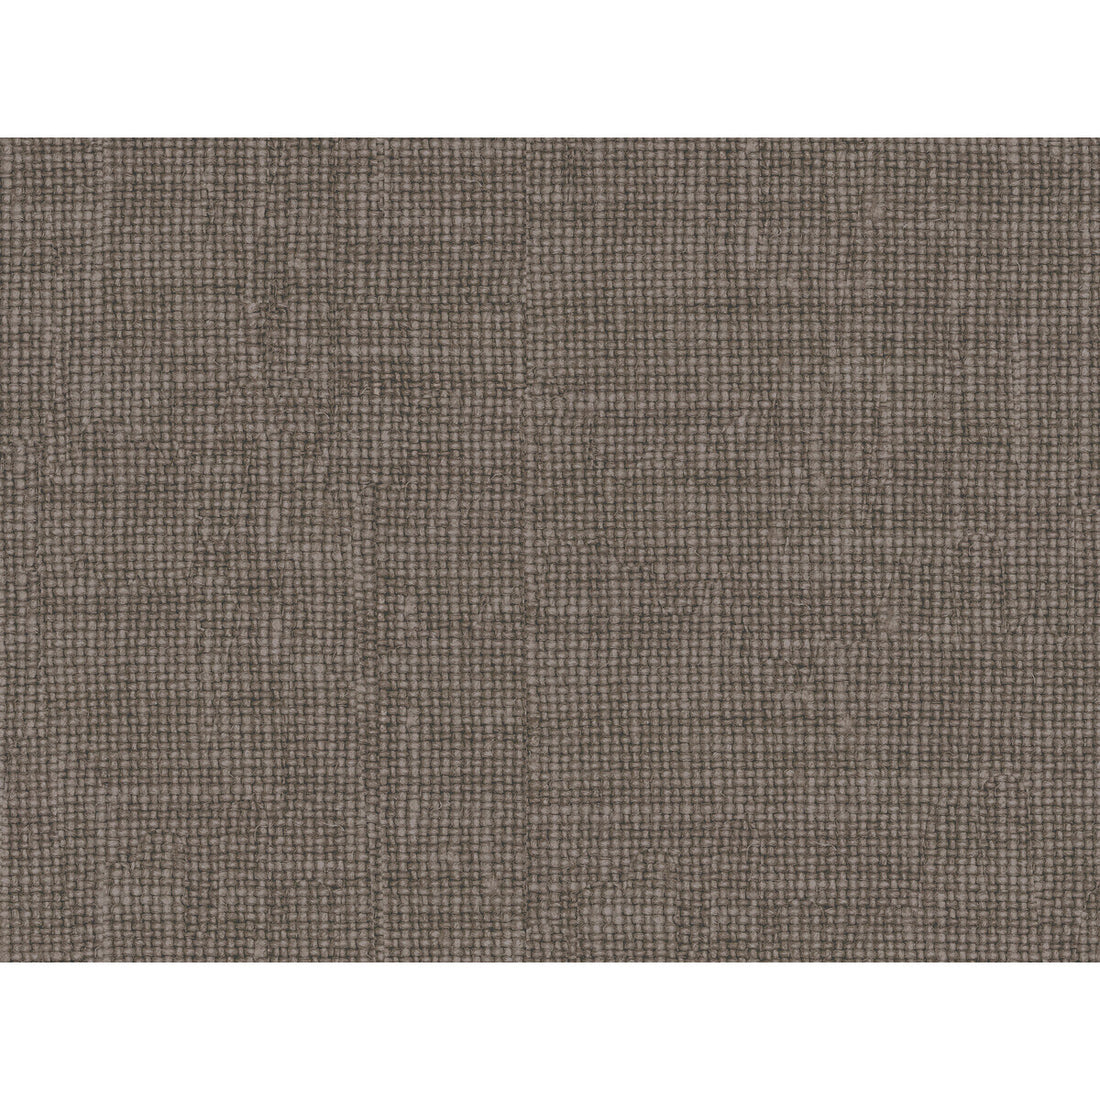 Kravet Basics fabric in 33767-1116 color - pattern 33767.1116.0 - by Kravet Basics in the Gis collection